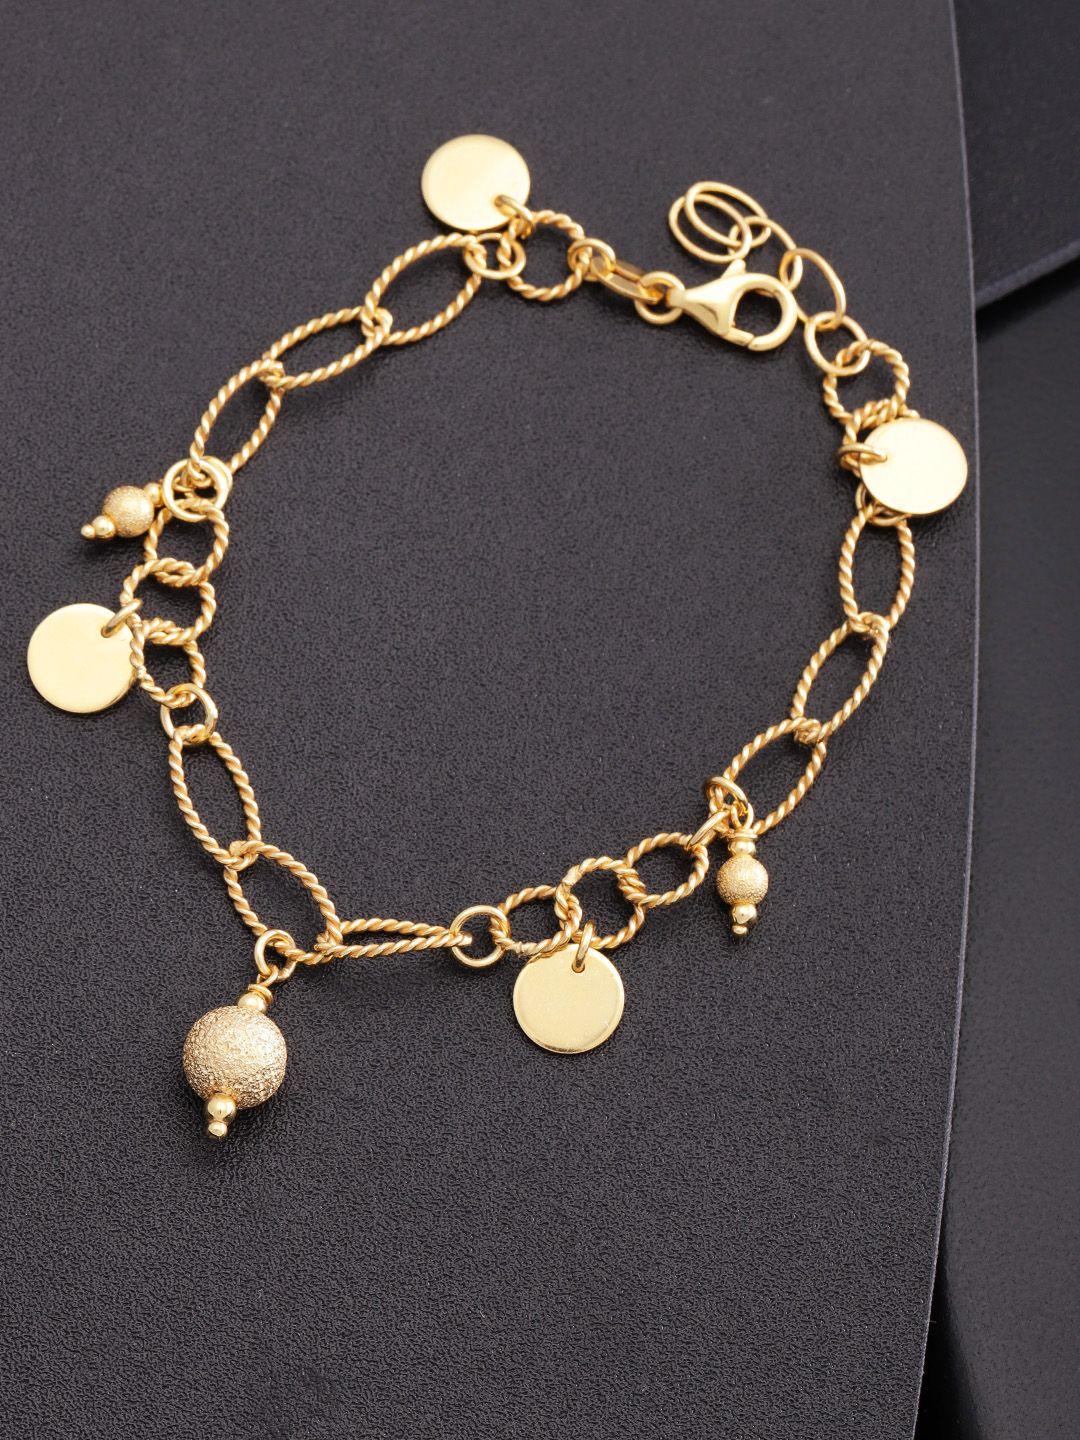 carlton london gold-plated charm bracelet